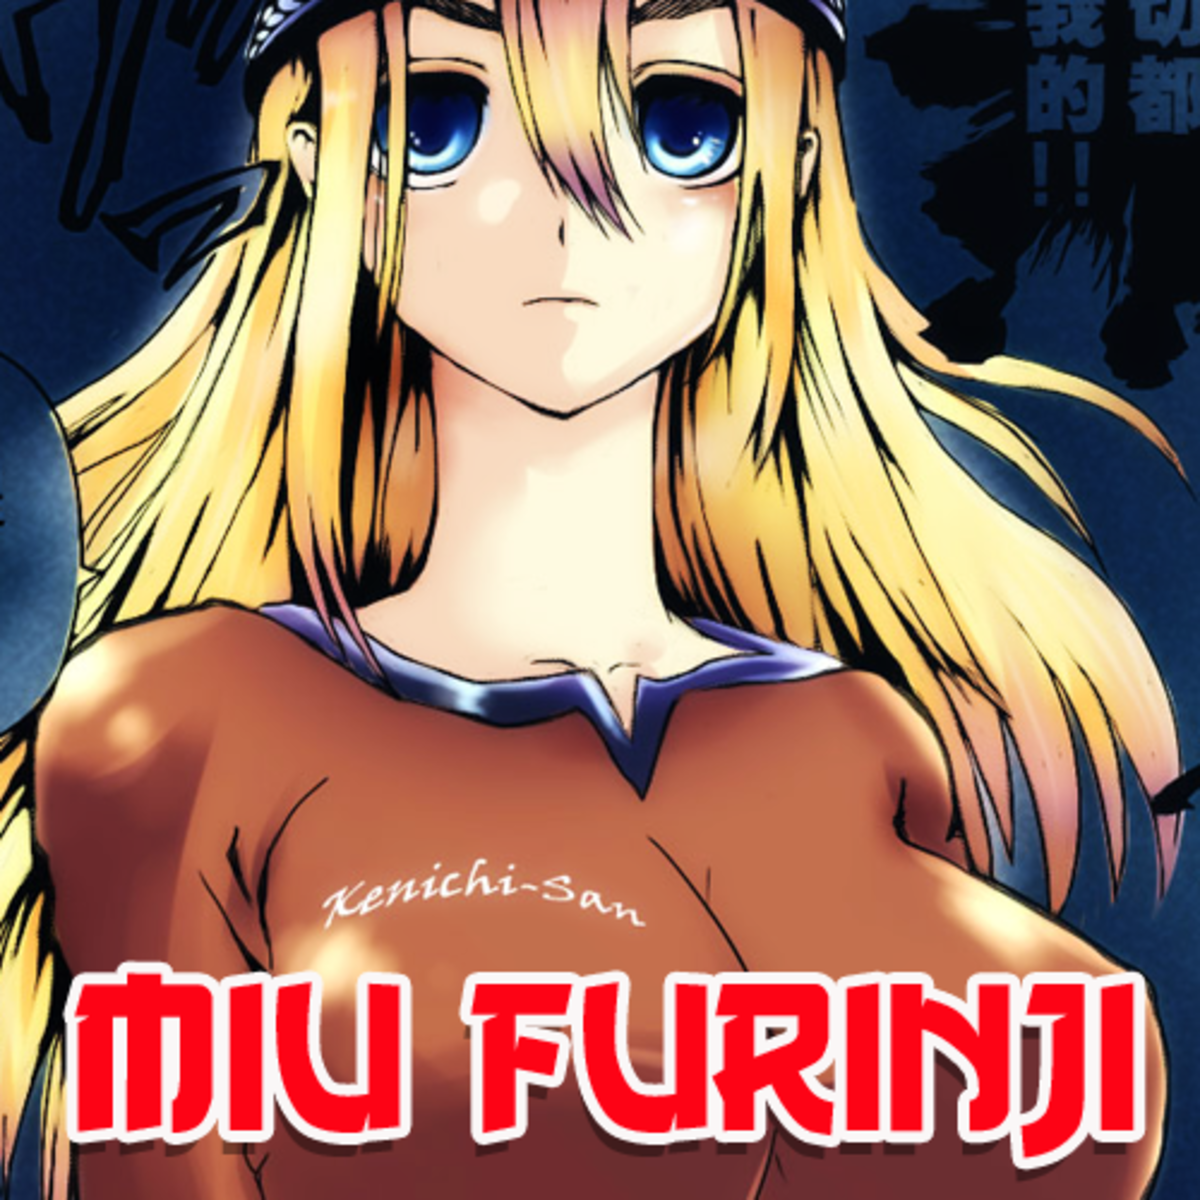 Miu Furinji